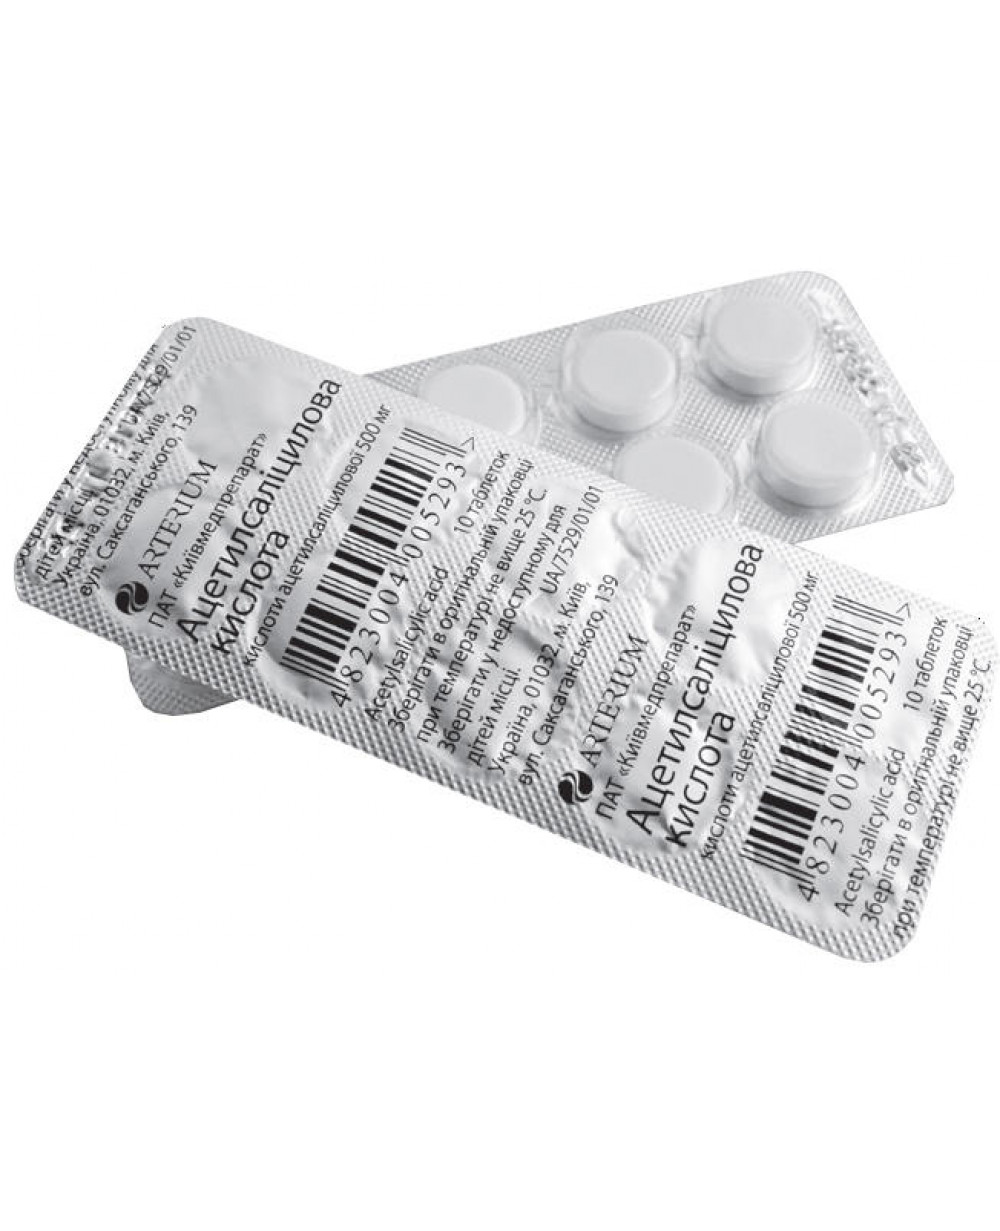 2750 ВІКС АКТИВ СИМПТОМАКС - Paracetamol, combinations excl. psycholeptics